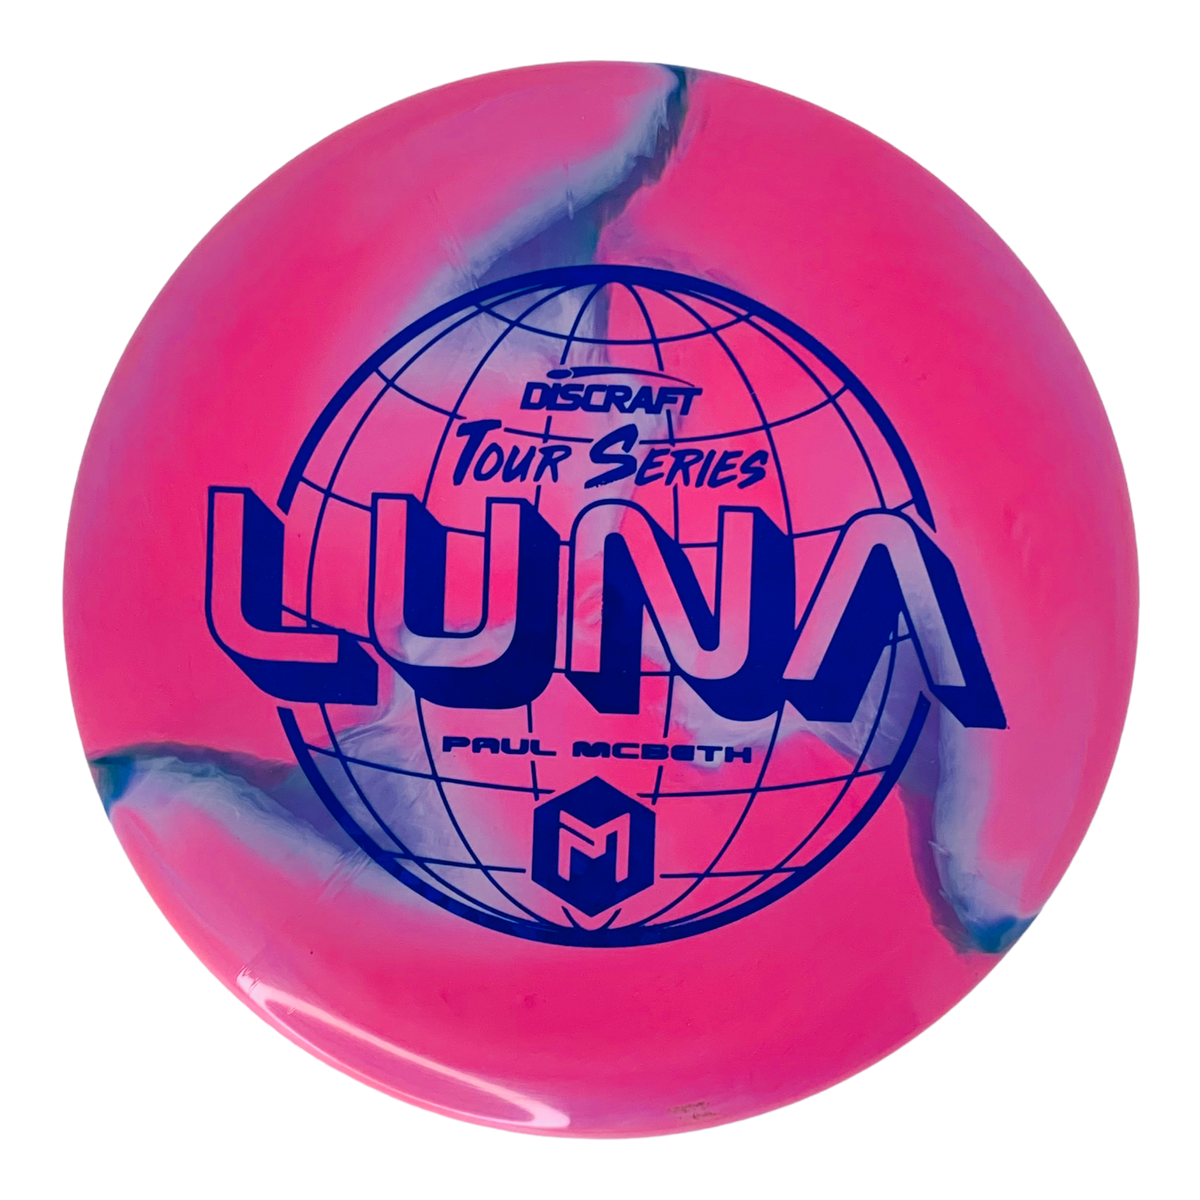 Discraft Paul McBeth ESP Swirl Luna - Tour Series (2022)